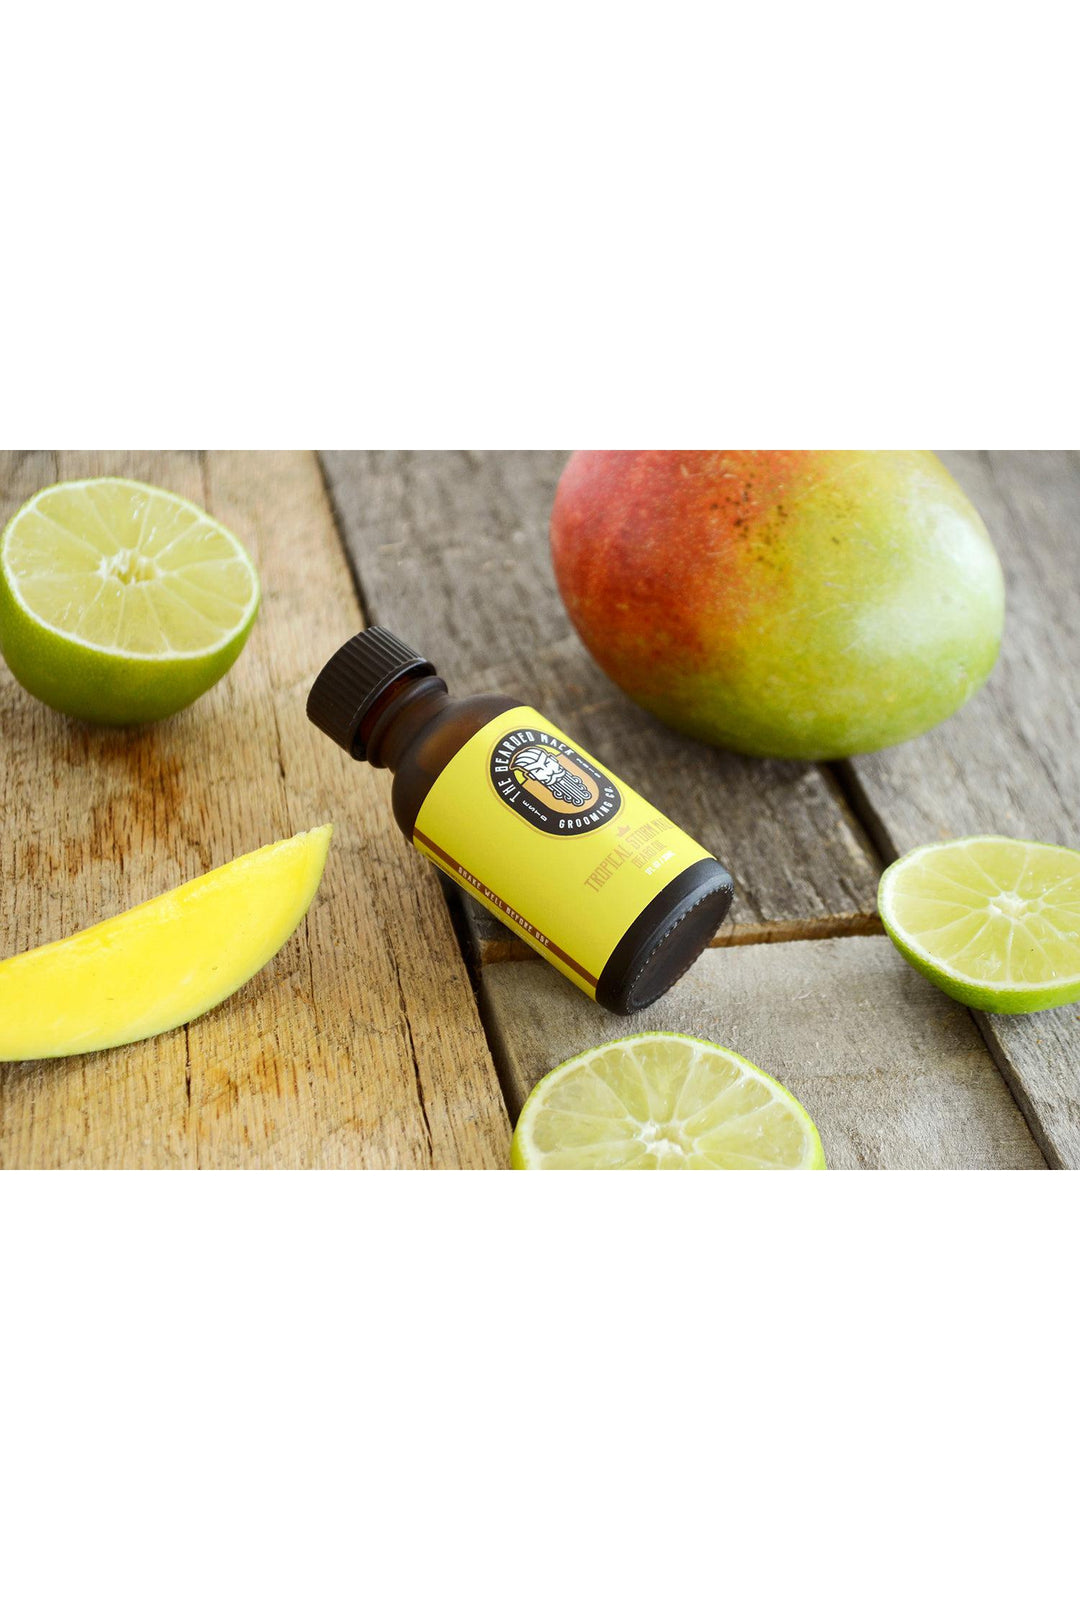 Tropical Storm Mack Beard Oil - Mango + Lime Beard Oil The Bearded Mack Grooming CO   